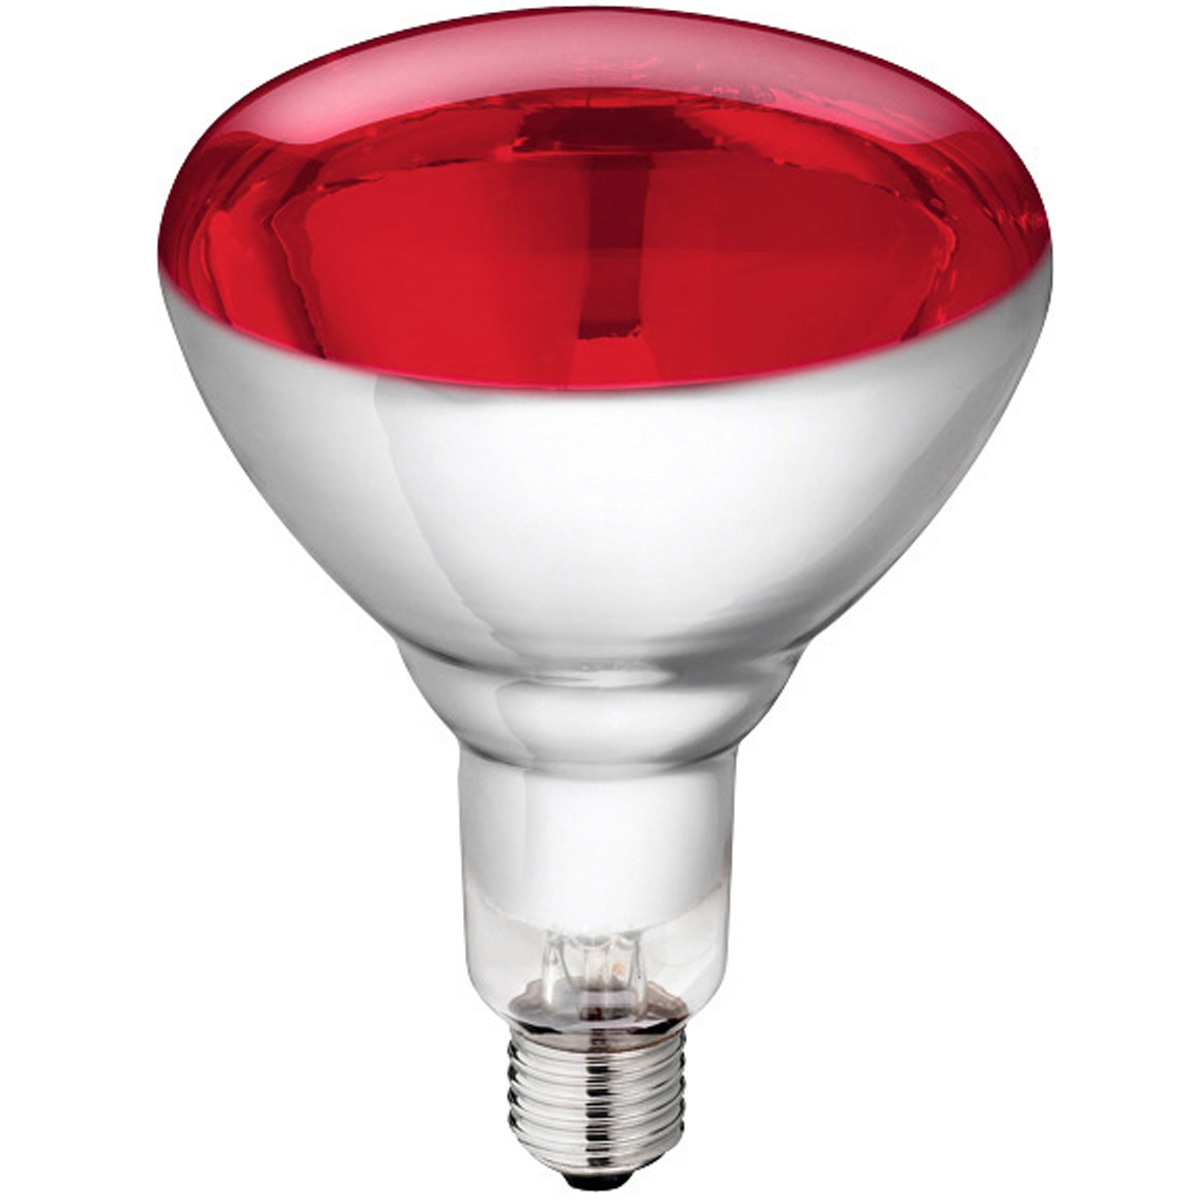 Dispositif de rayonnement de chaleur infrarouge avec lampe en verre dur 250 W, rouge